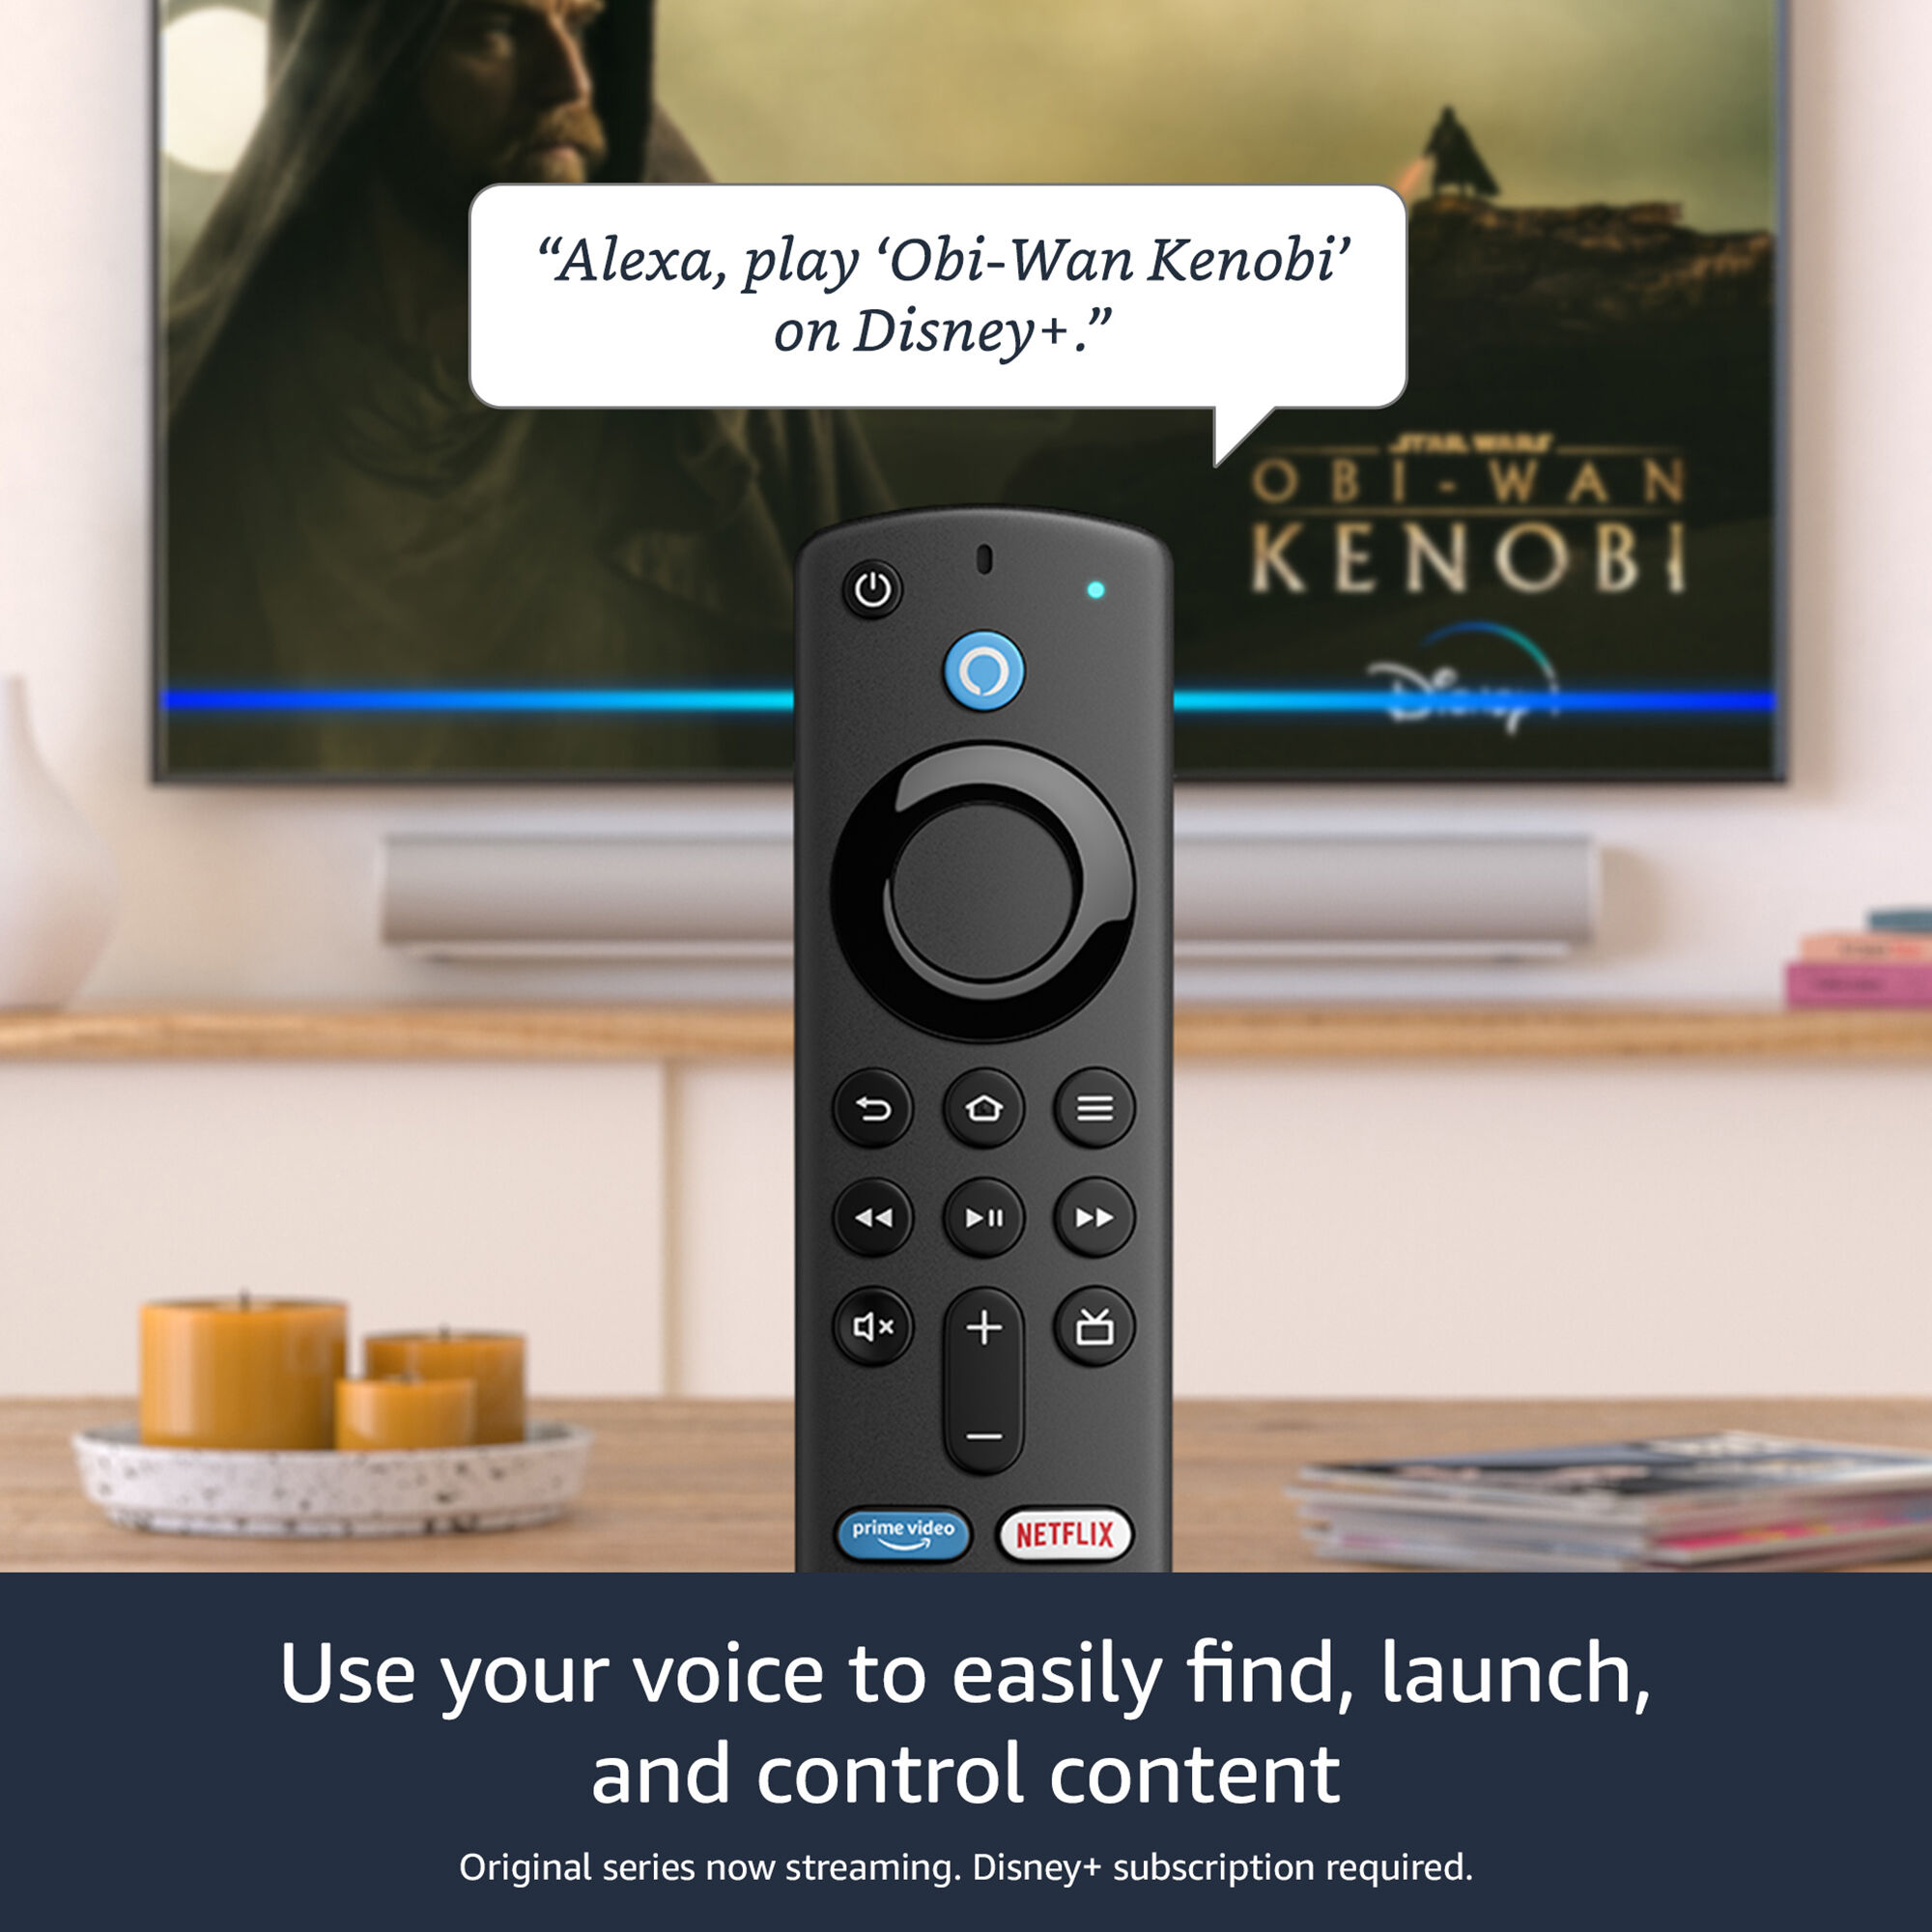 Amazon Fire TV Stick 4K Max streaming device, Wi-Fi 6E, Alexa